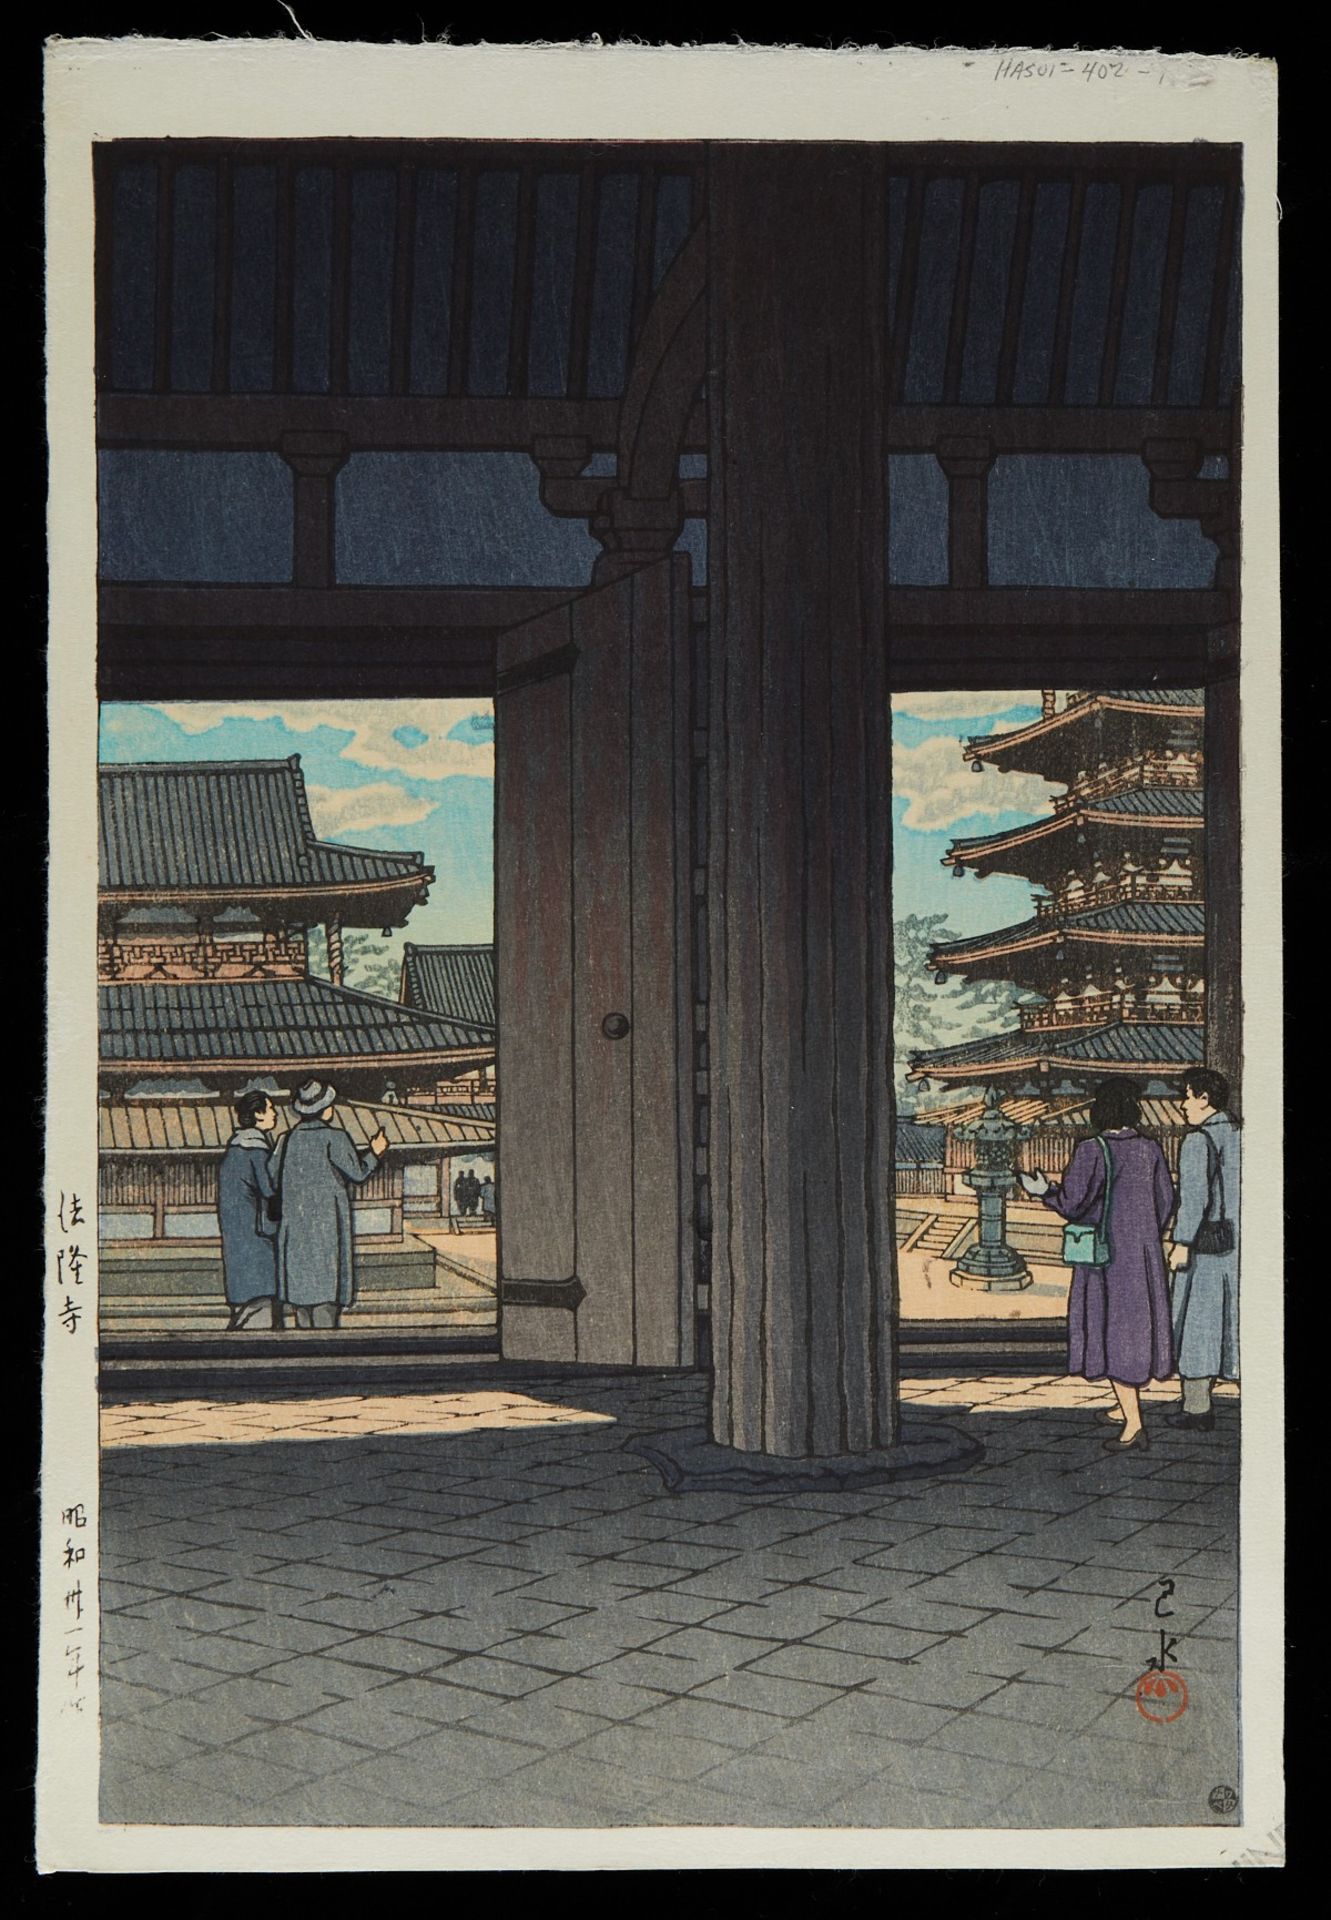 Hasui Kawase "Temple" Shin-hanga Print